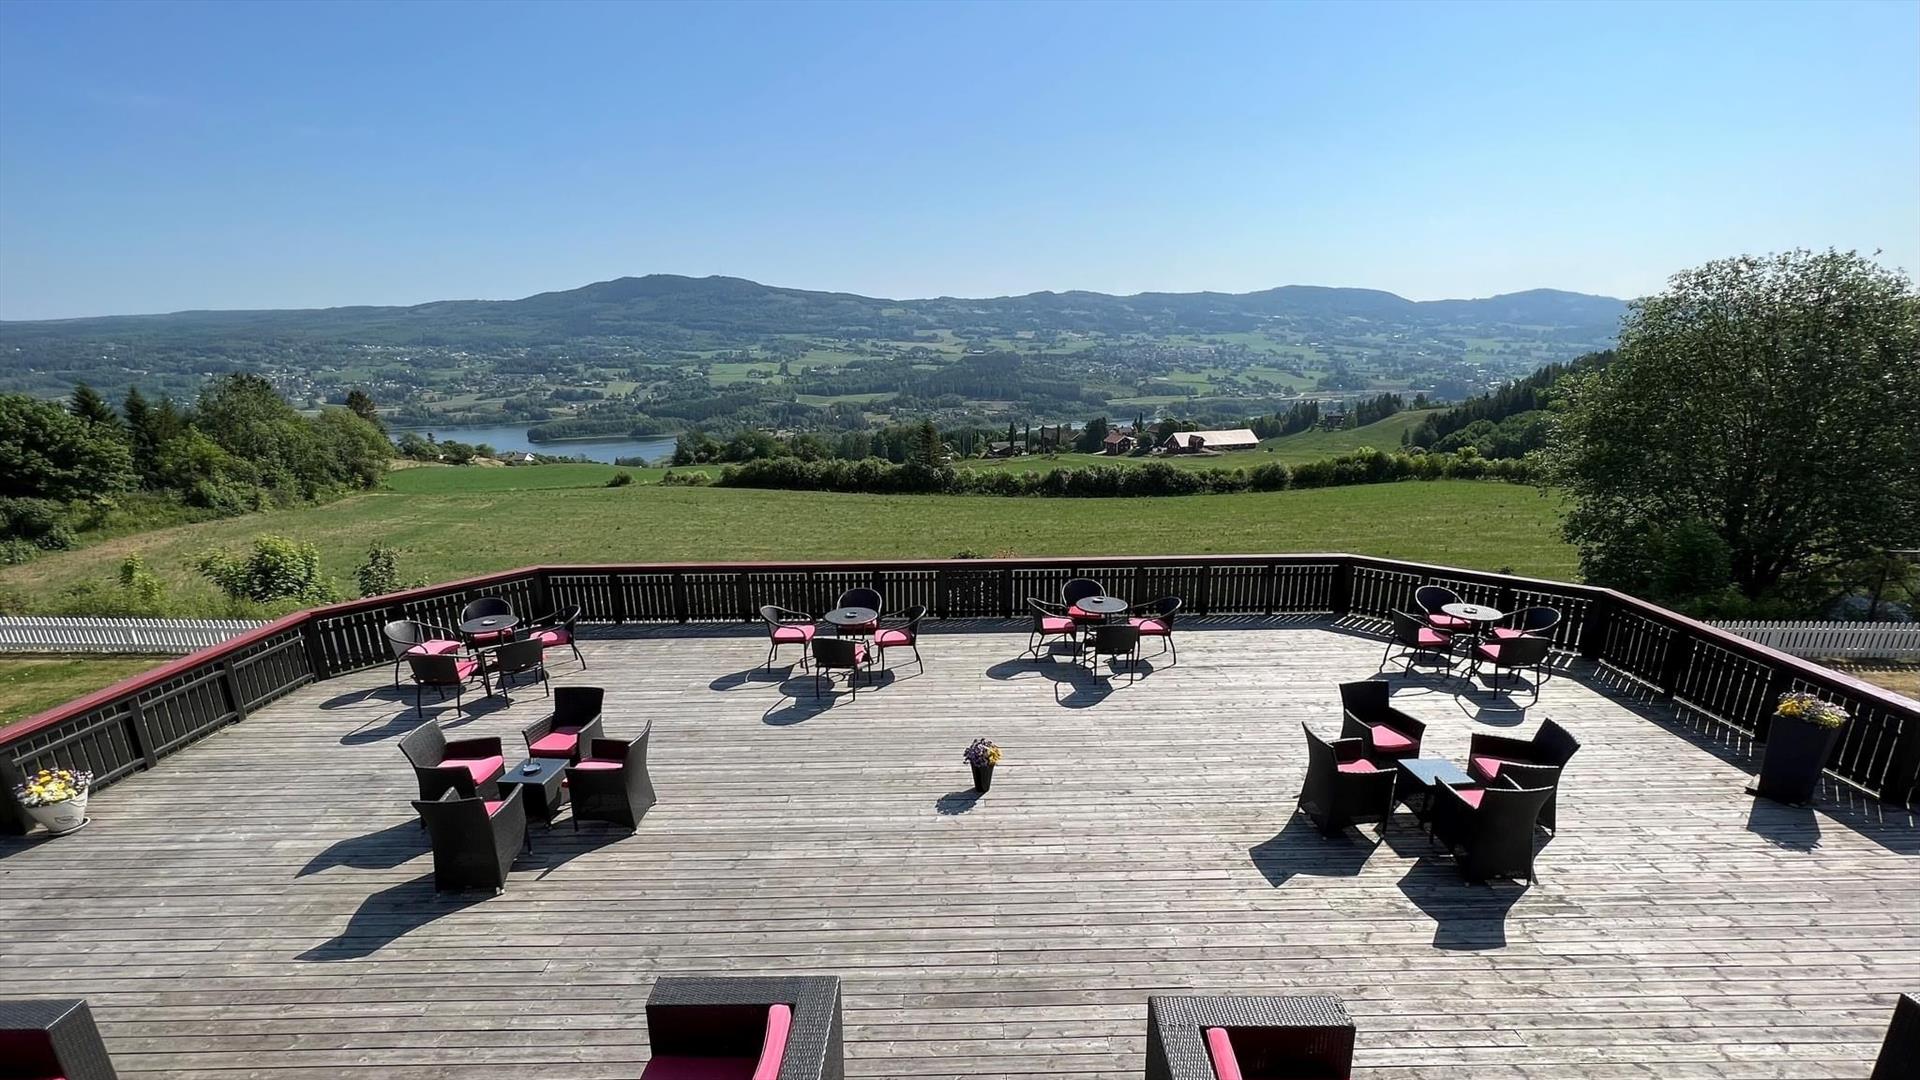 Hotell Hadeland på Granavollen. Gigantisk terrasse med fantastisk utsikt over kulturlandskapet på Hadeland